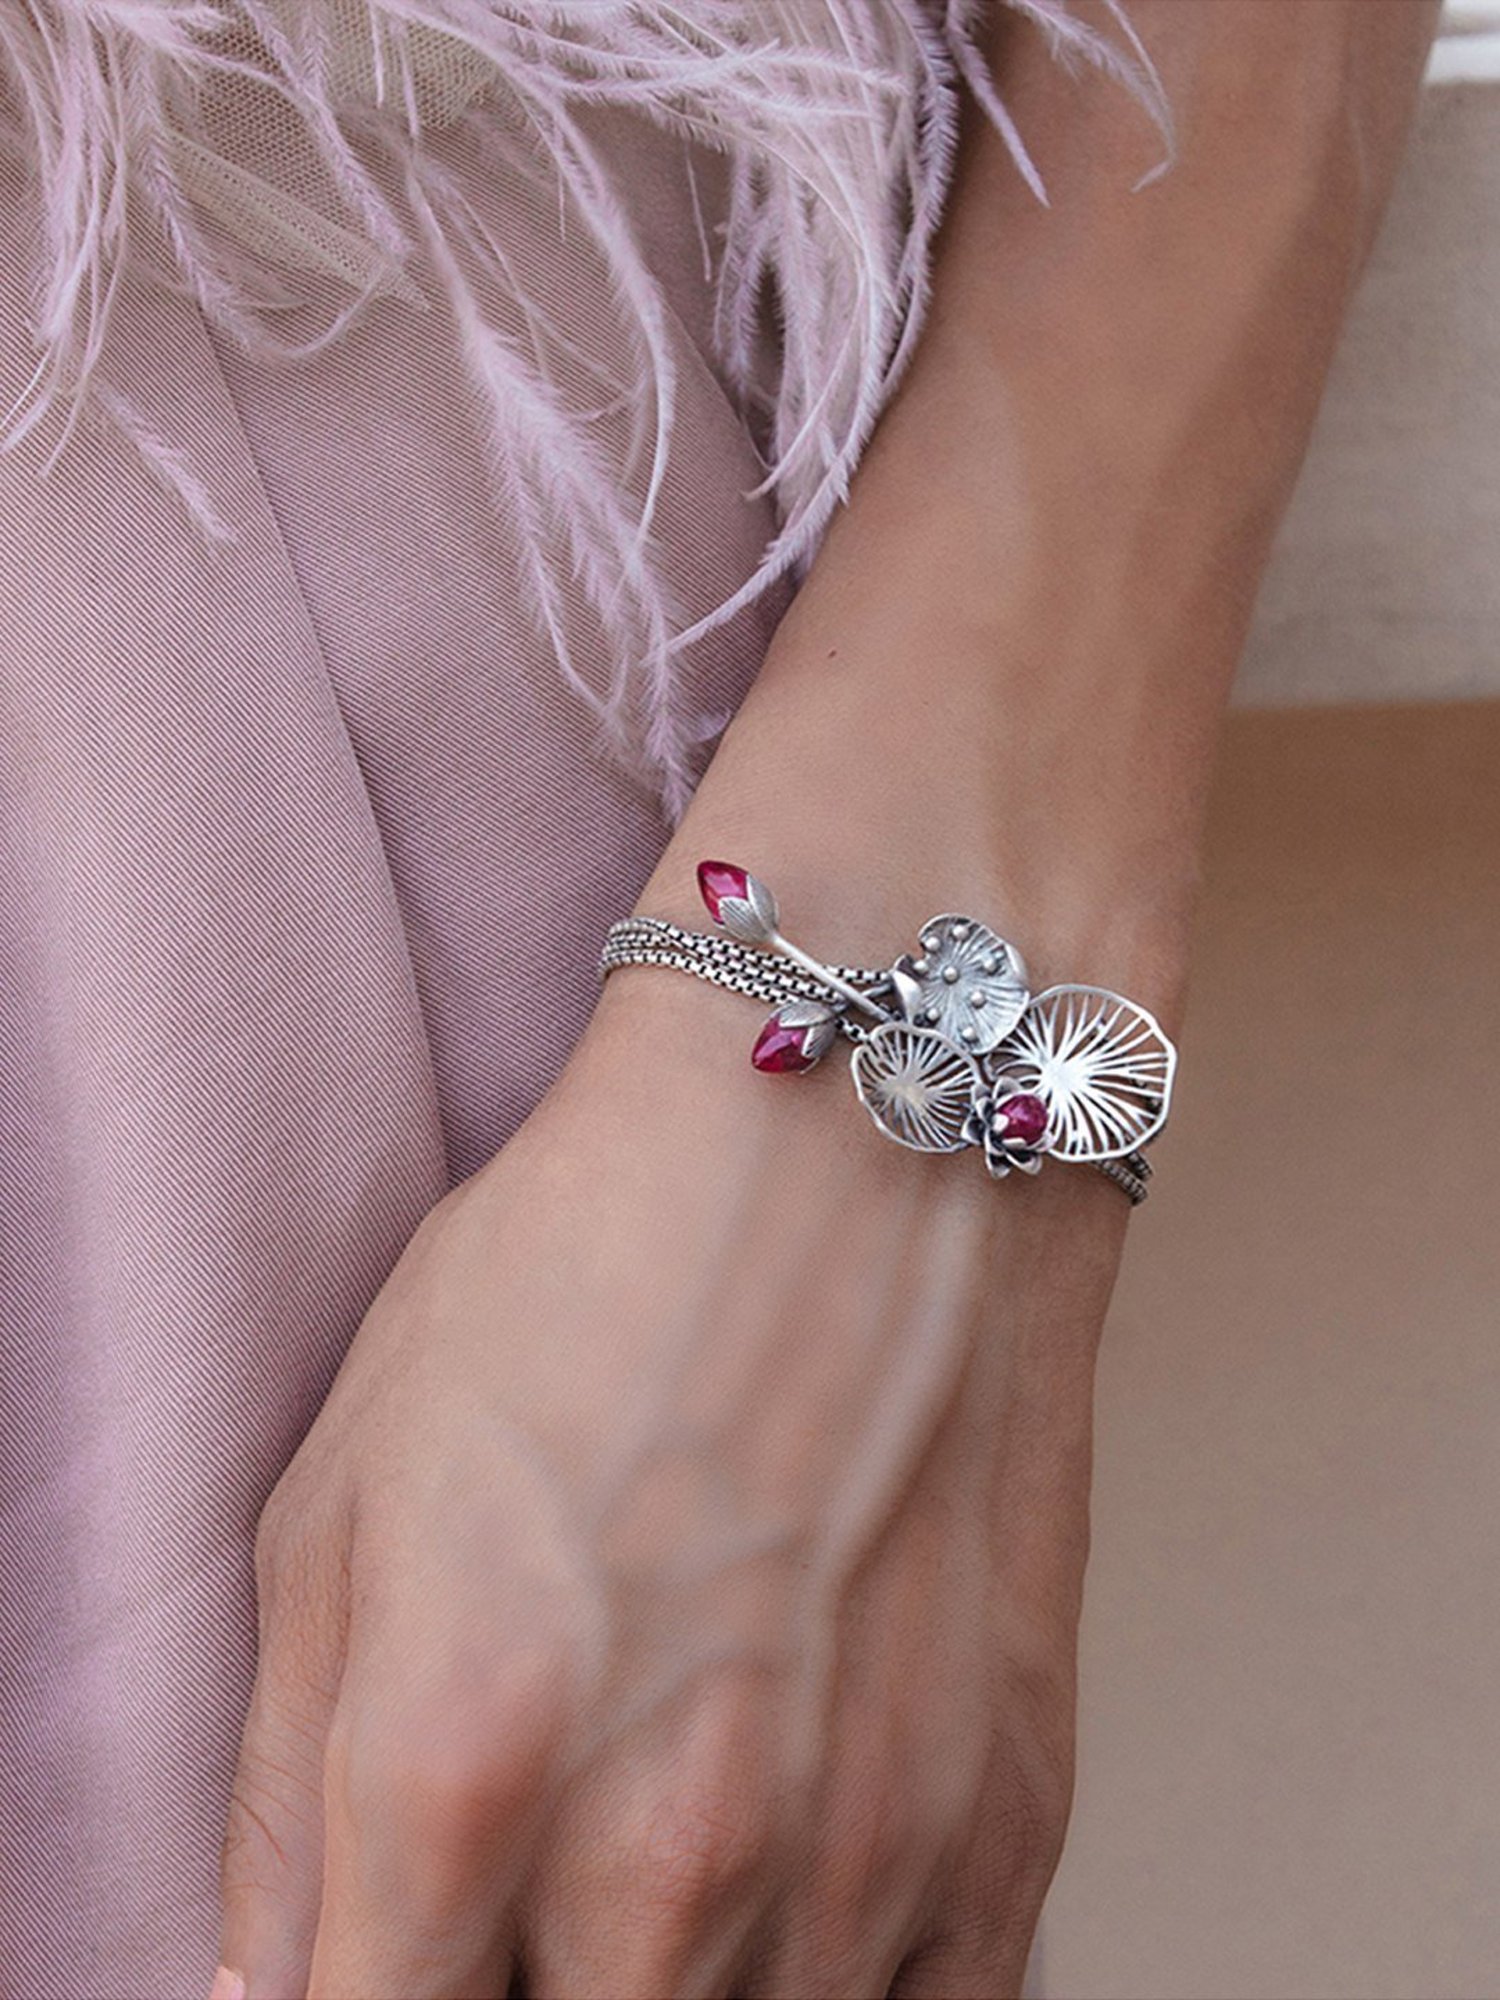 SHAYA-Oxidised No Mani Needed Bracelet in 925 Silver, Uniquely handcrafted  | eBay